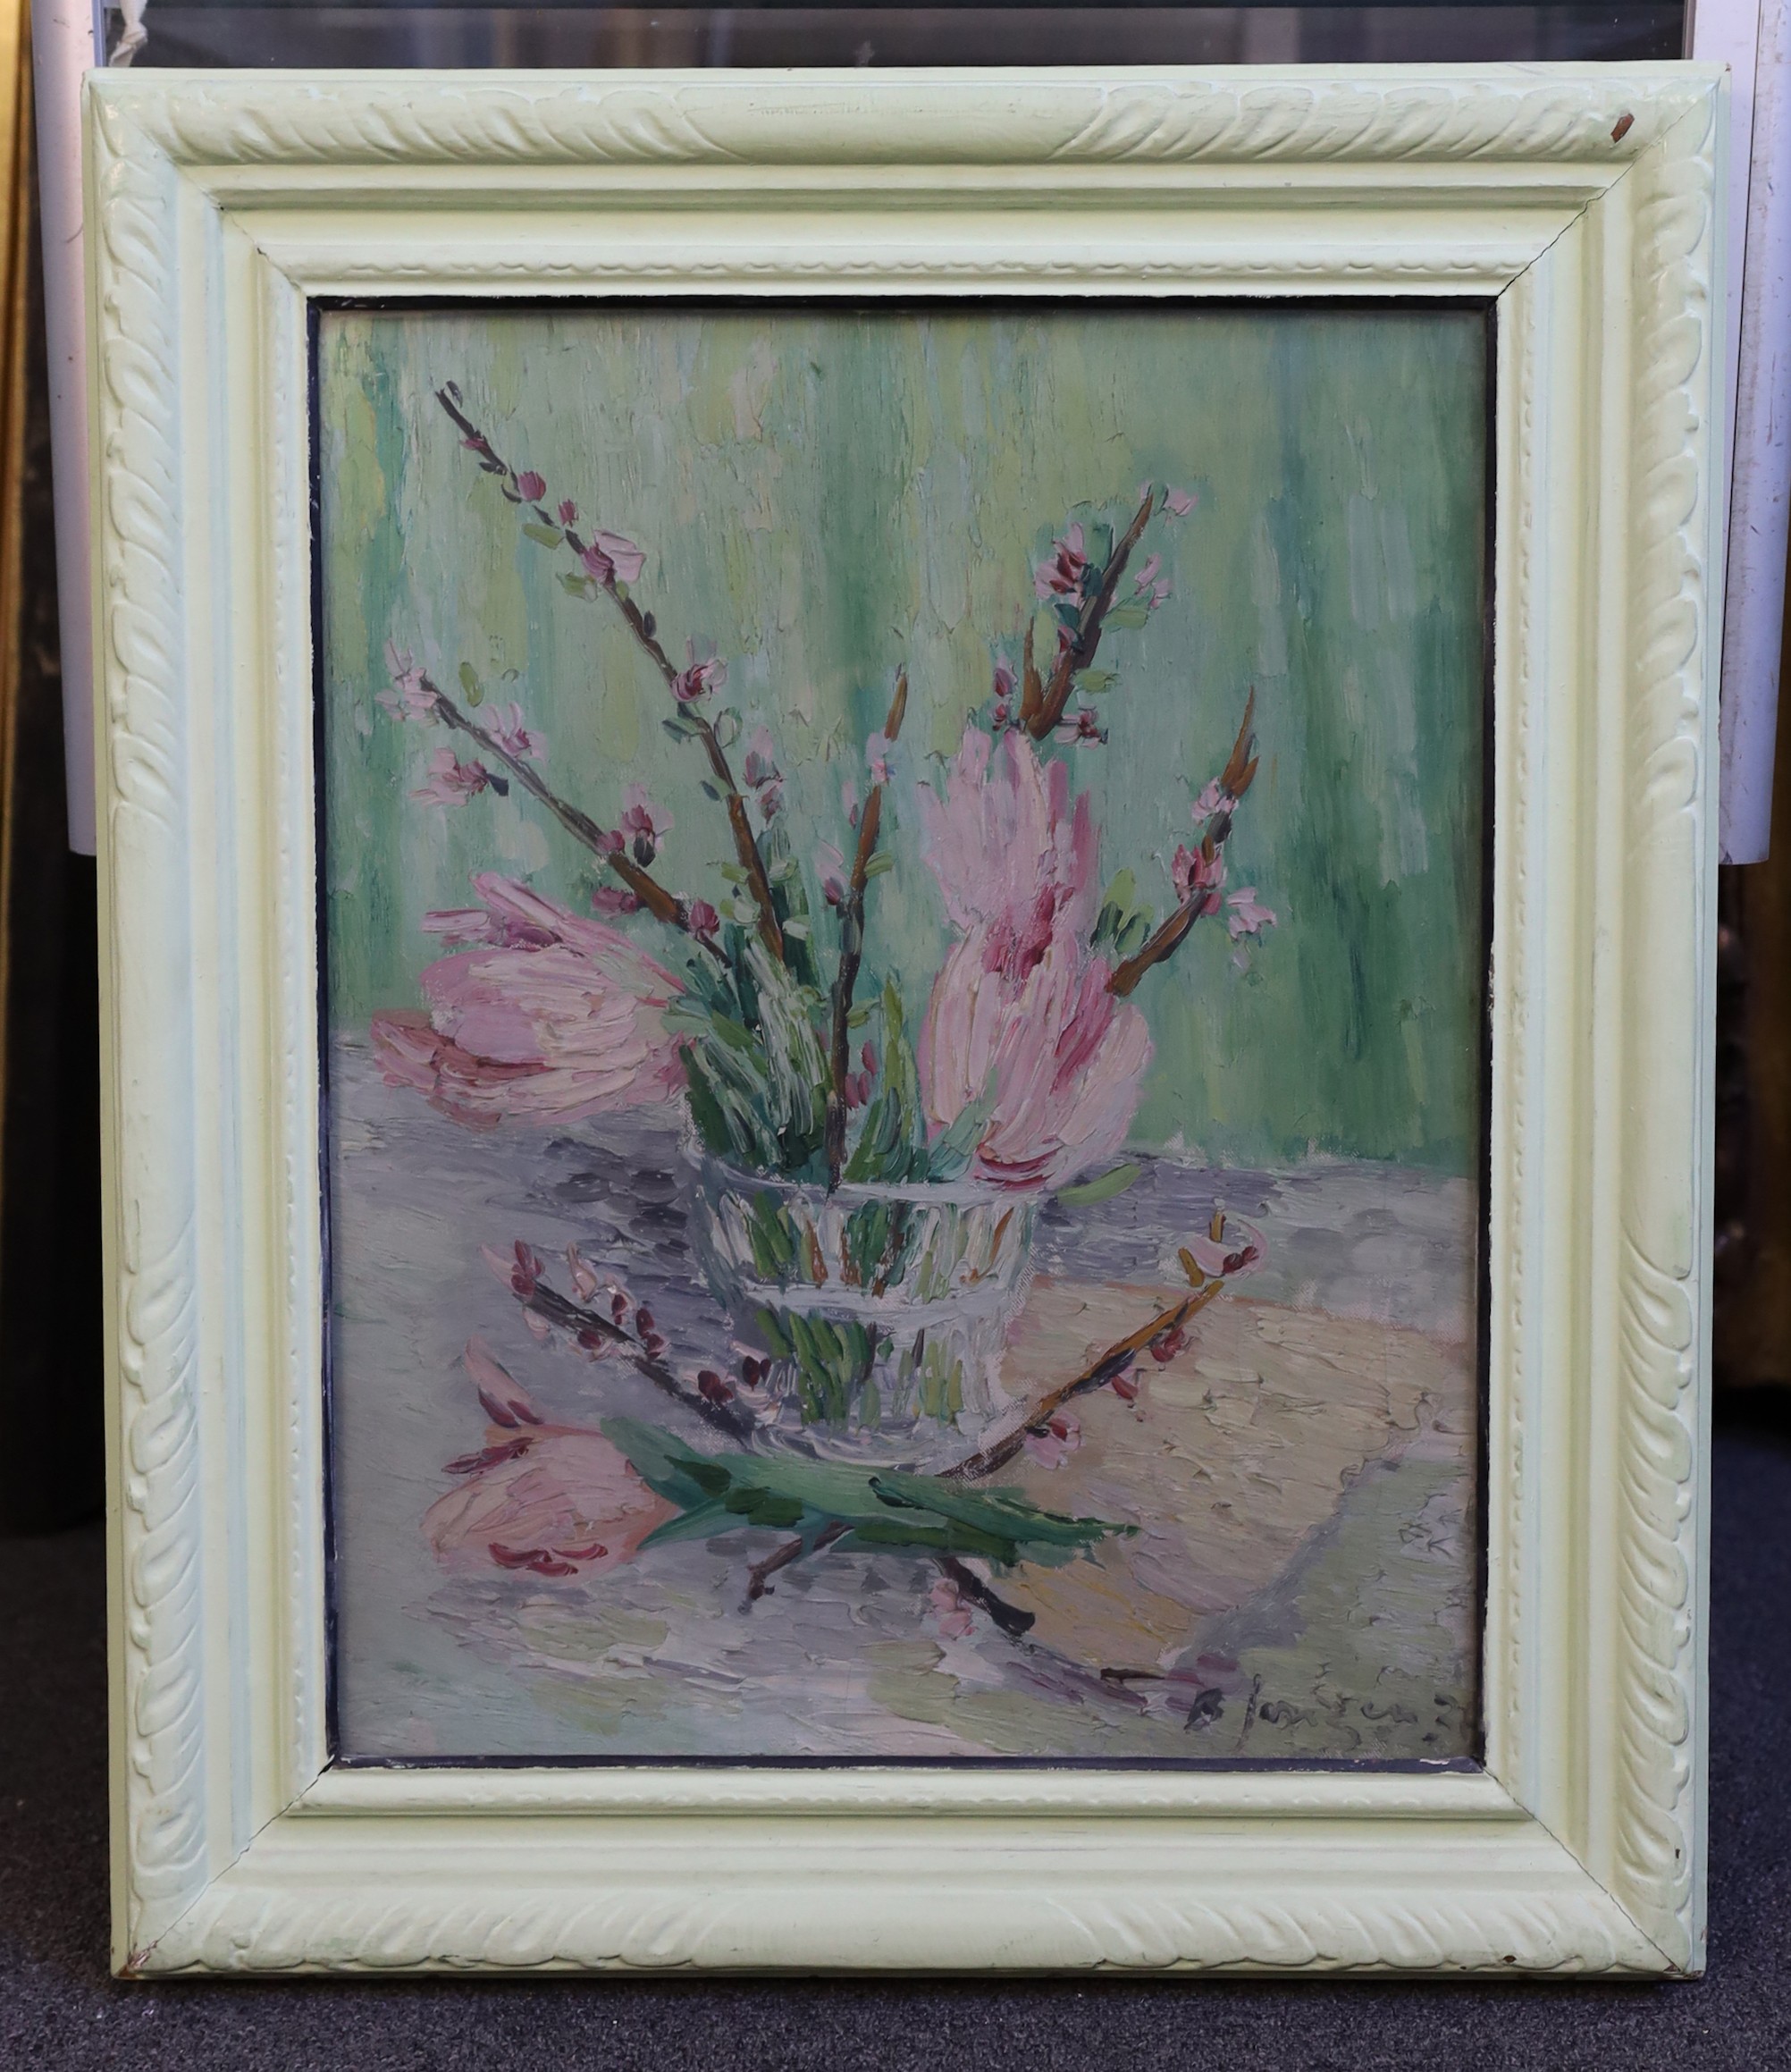 Basil Jonzen (British, 1913-1967), Still life of Magnolia blossom in a glass vase, oil on canvas, 51 x 40.5cm